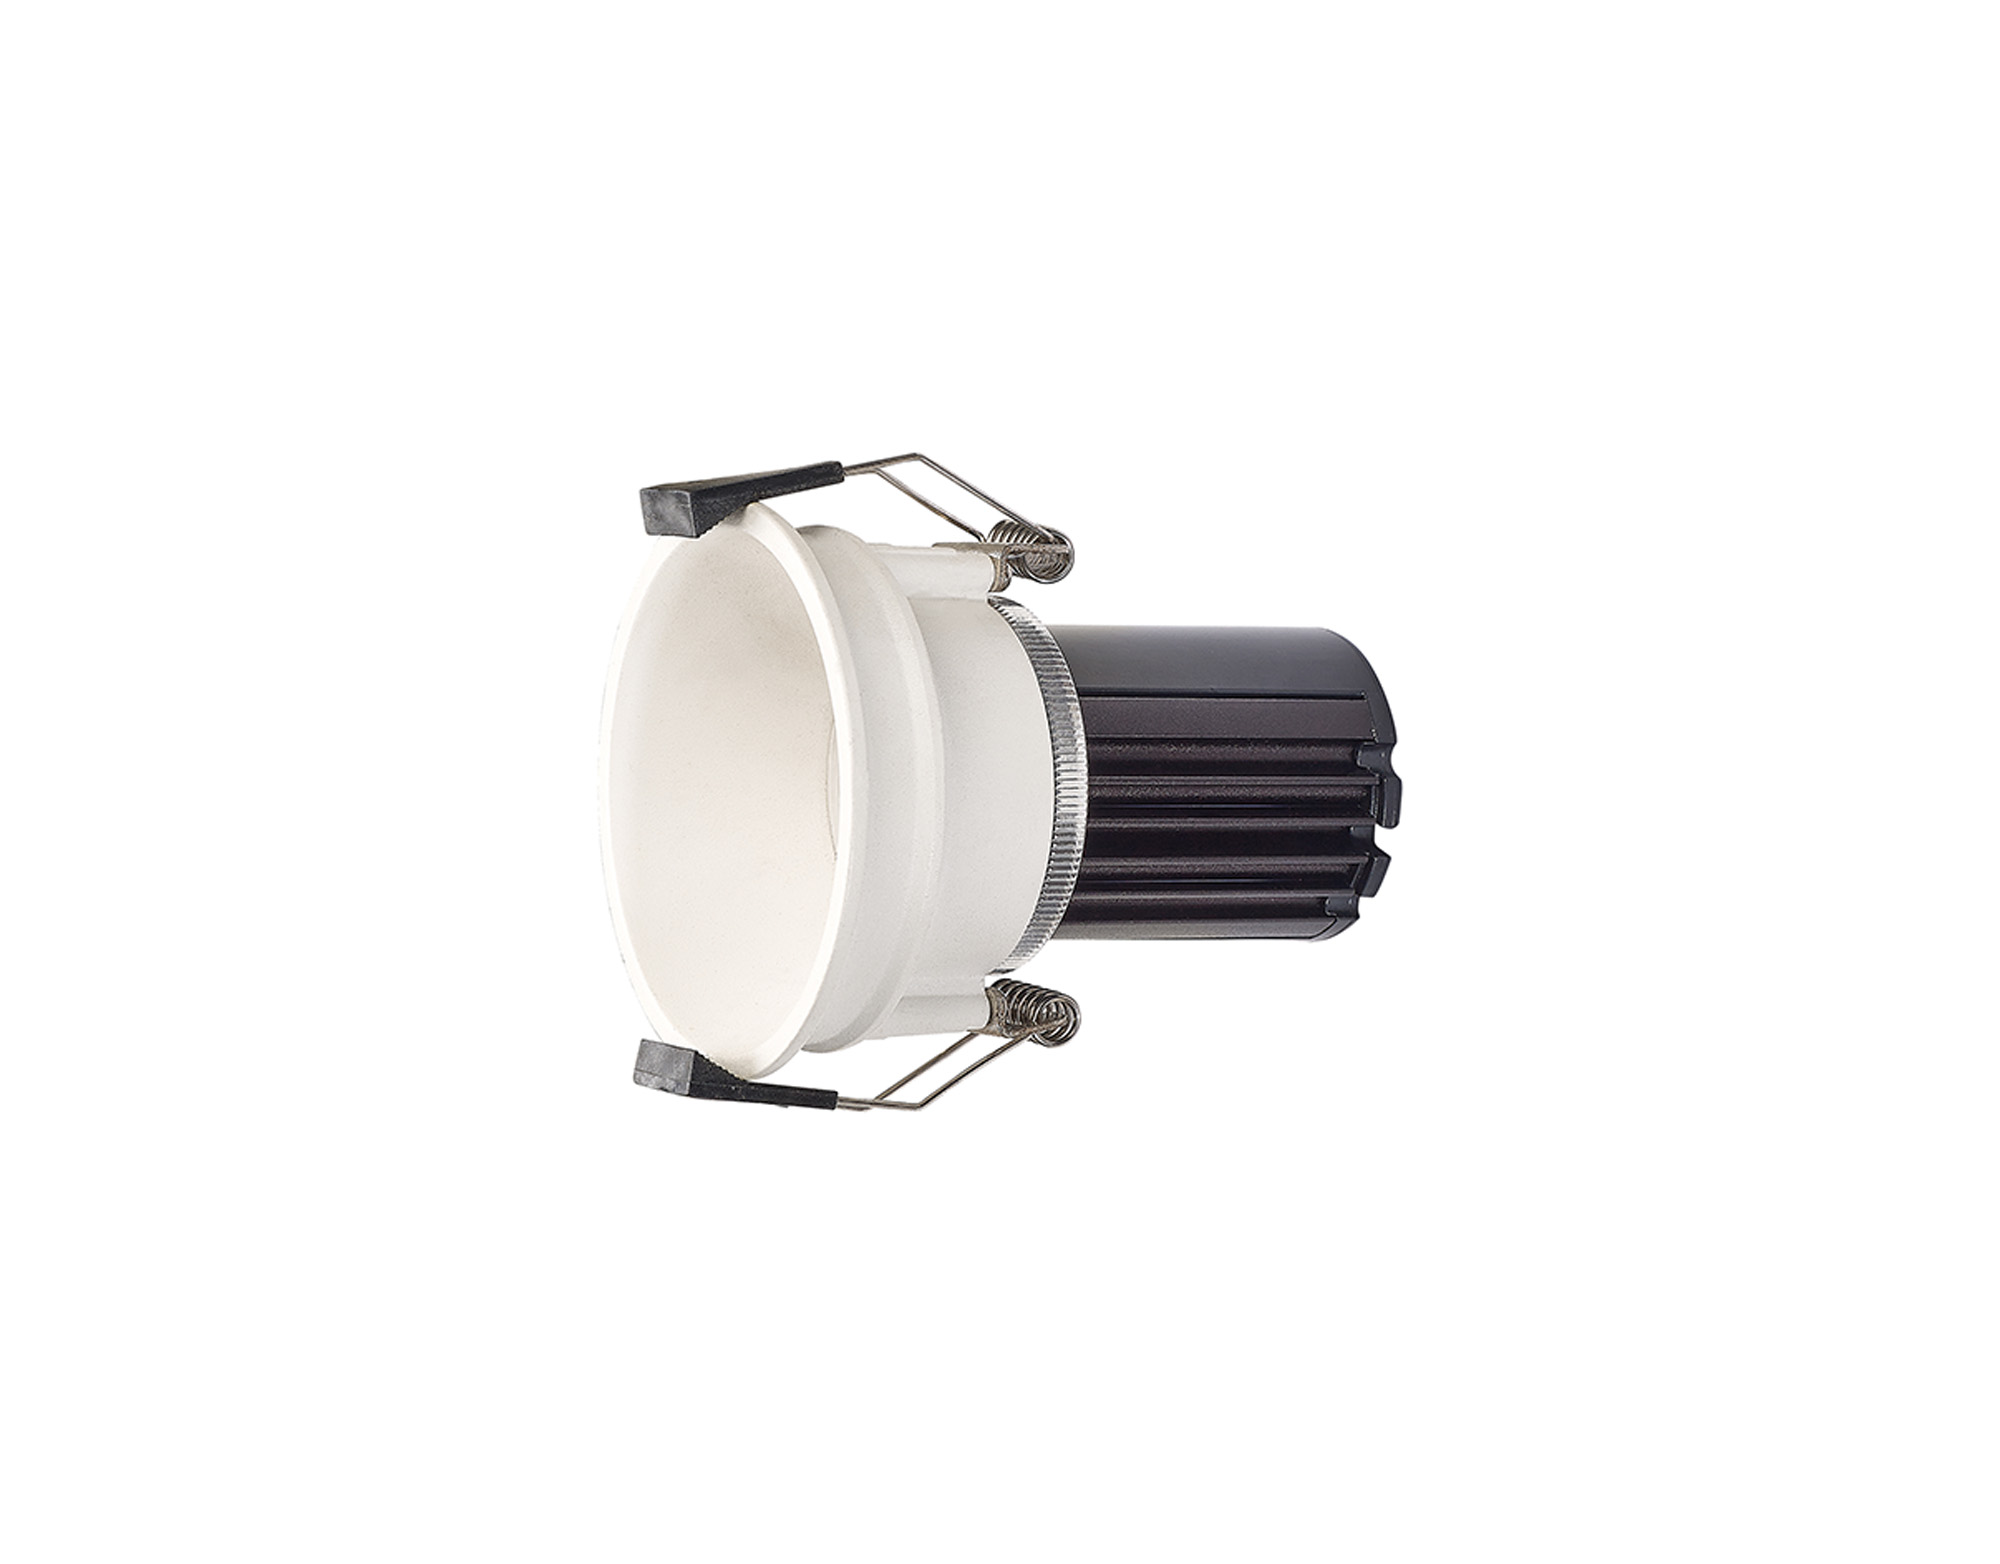 DM201618  Bania 8S 8W ;180mA 480lm 3000K 60° LED Engine; White IP20 Fixed Recessed Spotlight ; 5yrs Warranty